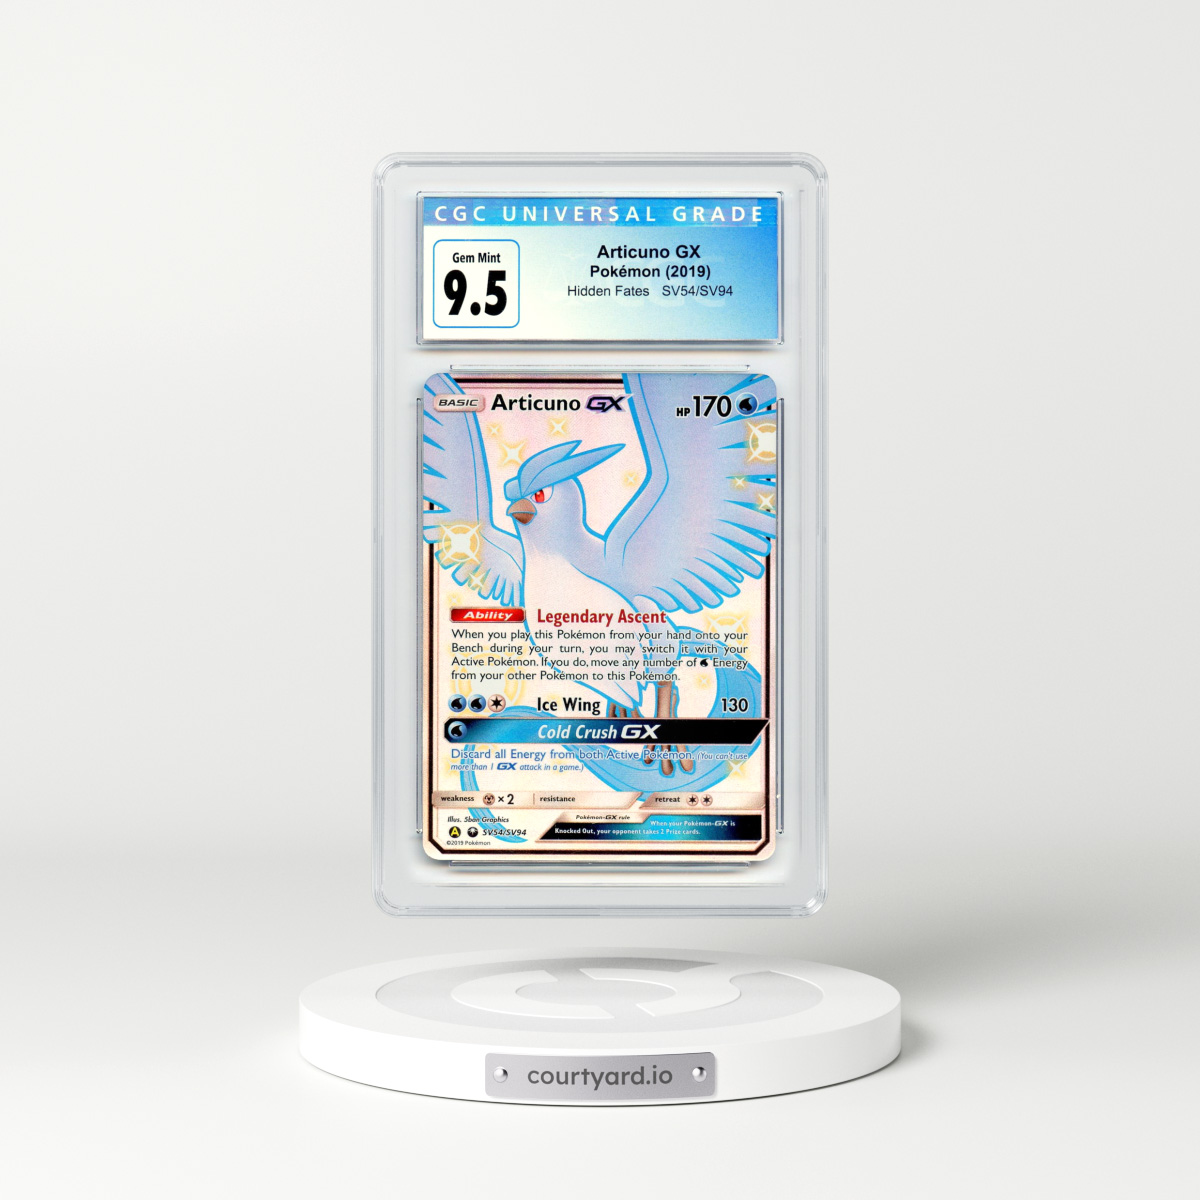 PSA 10 Gem Mint - SHINY ARTICUNO GX FULL ART - Pokemon